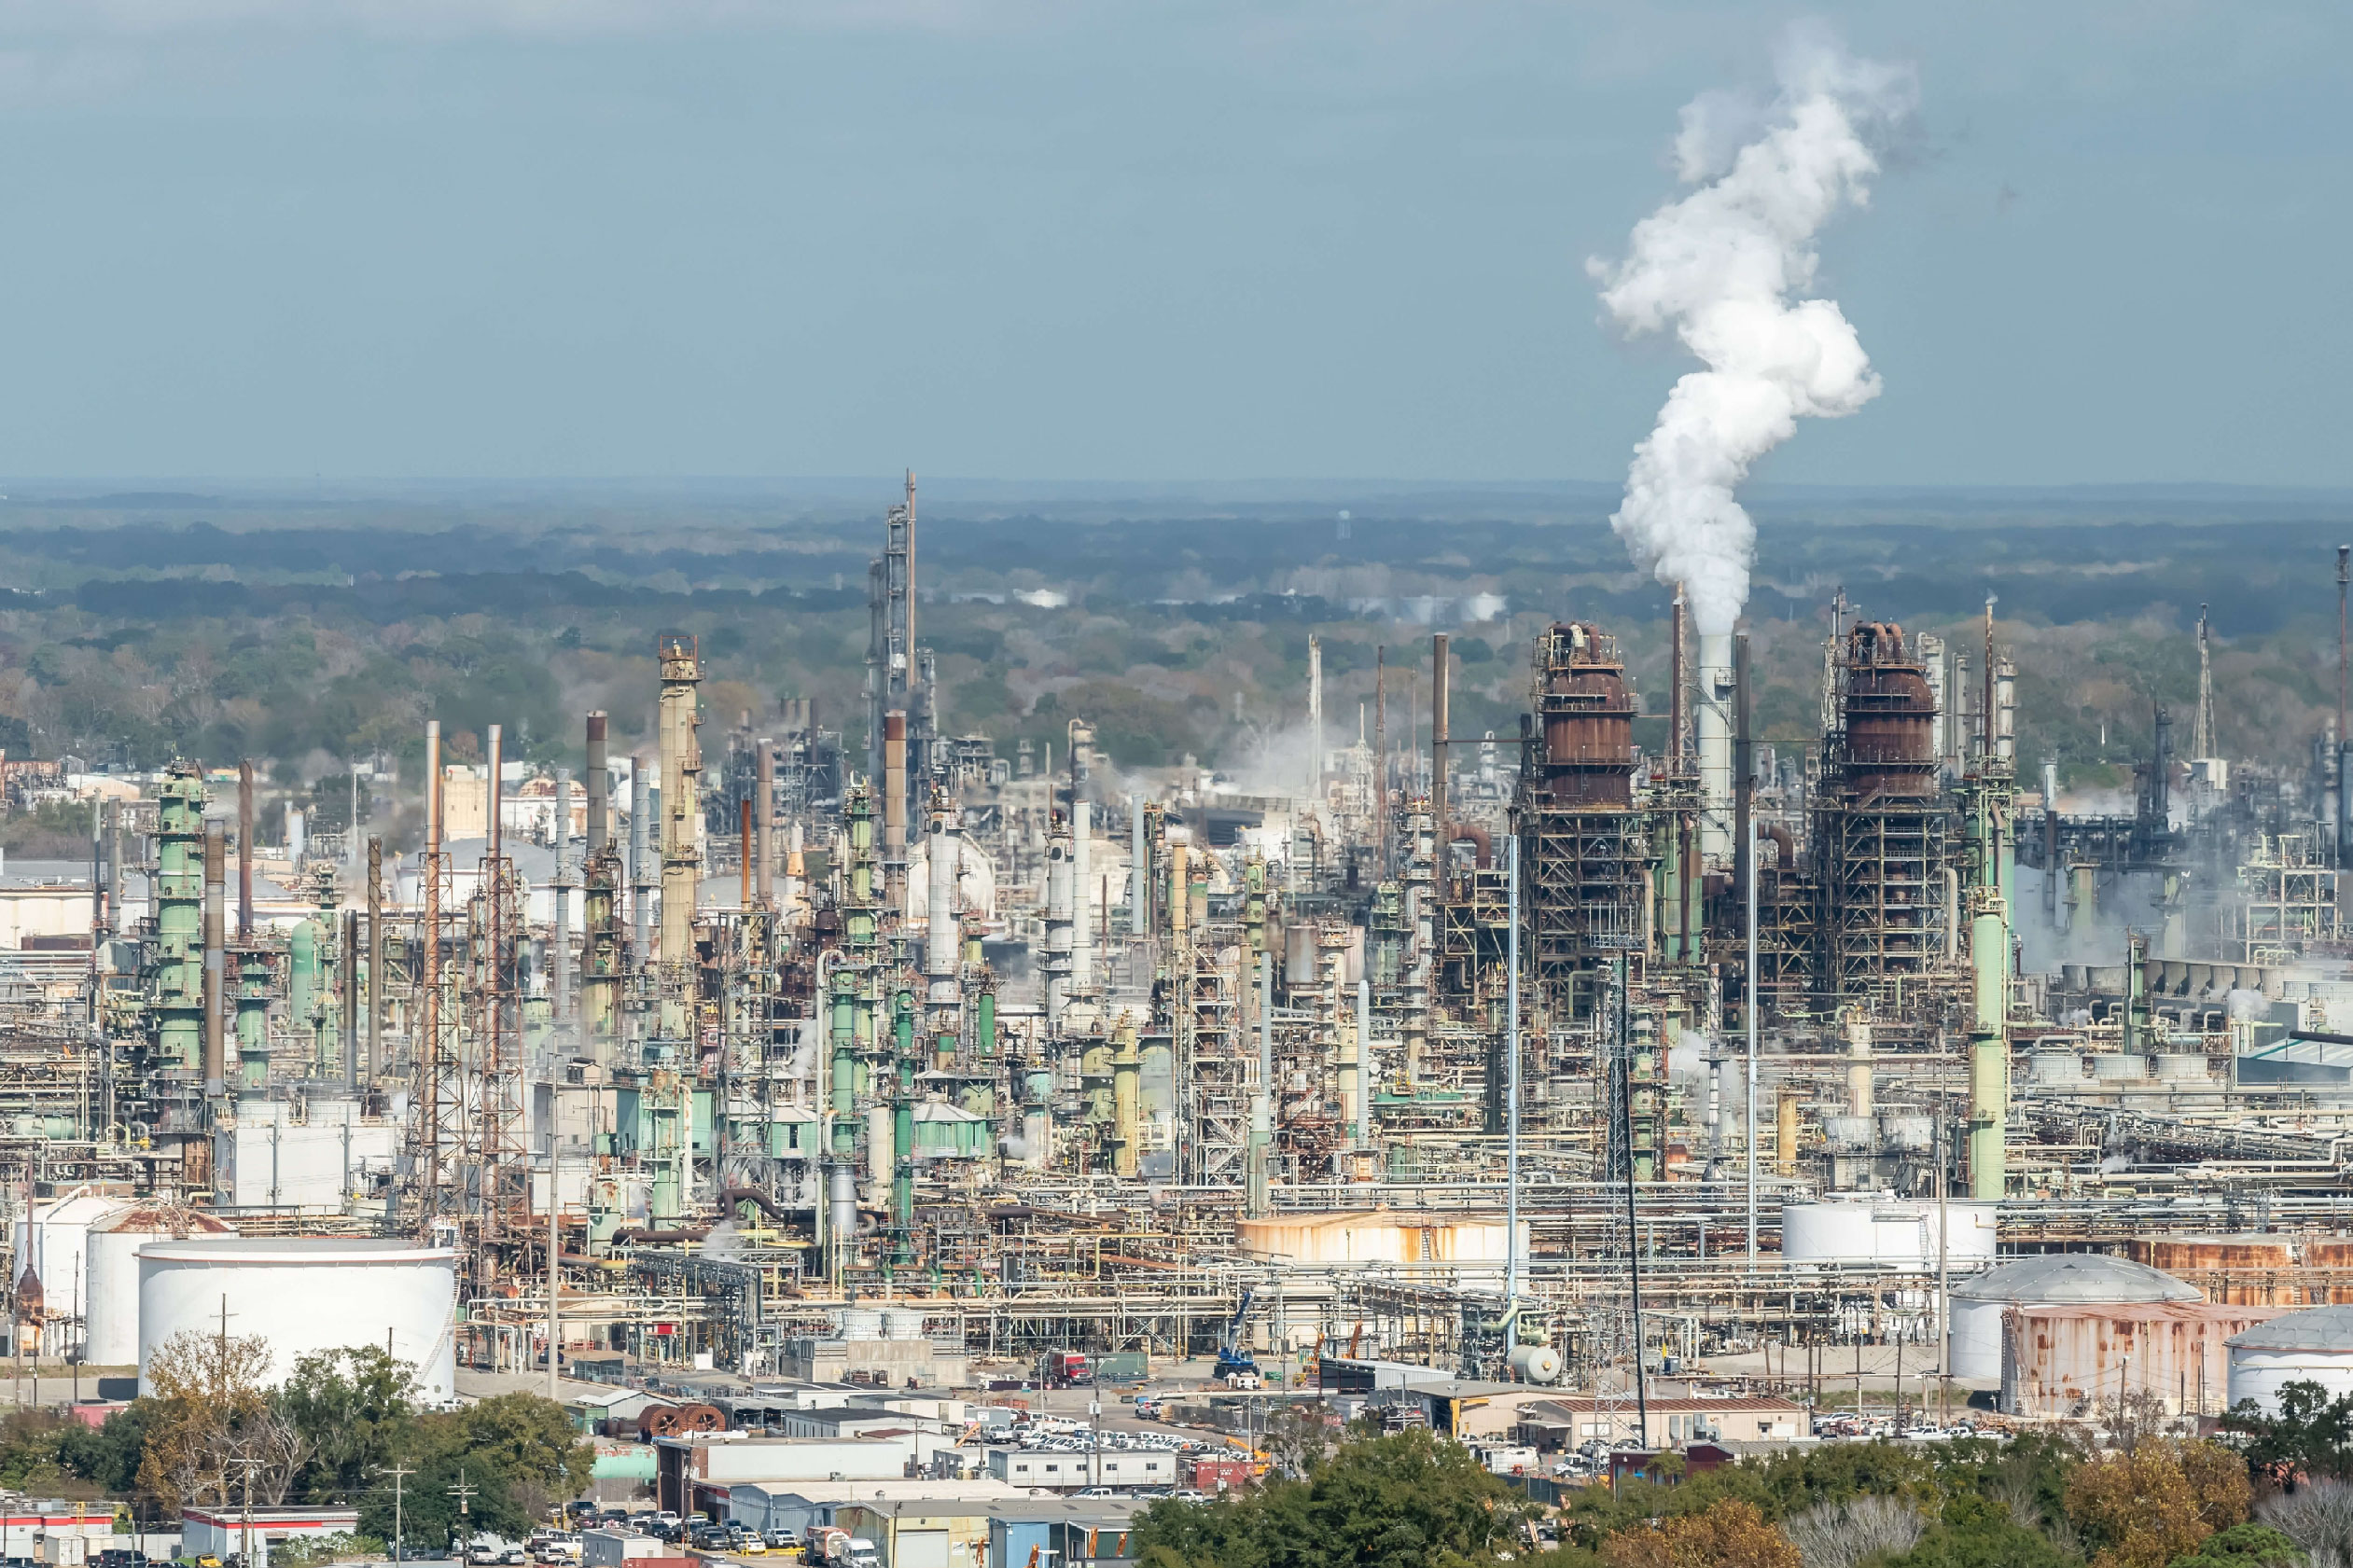 Oil refinery plant in Louisiana, United States of America